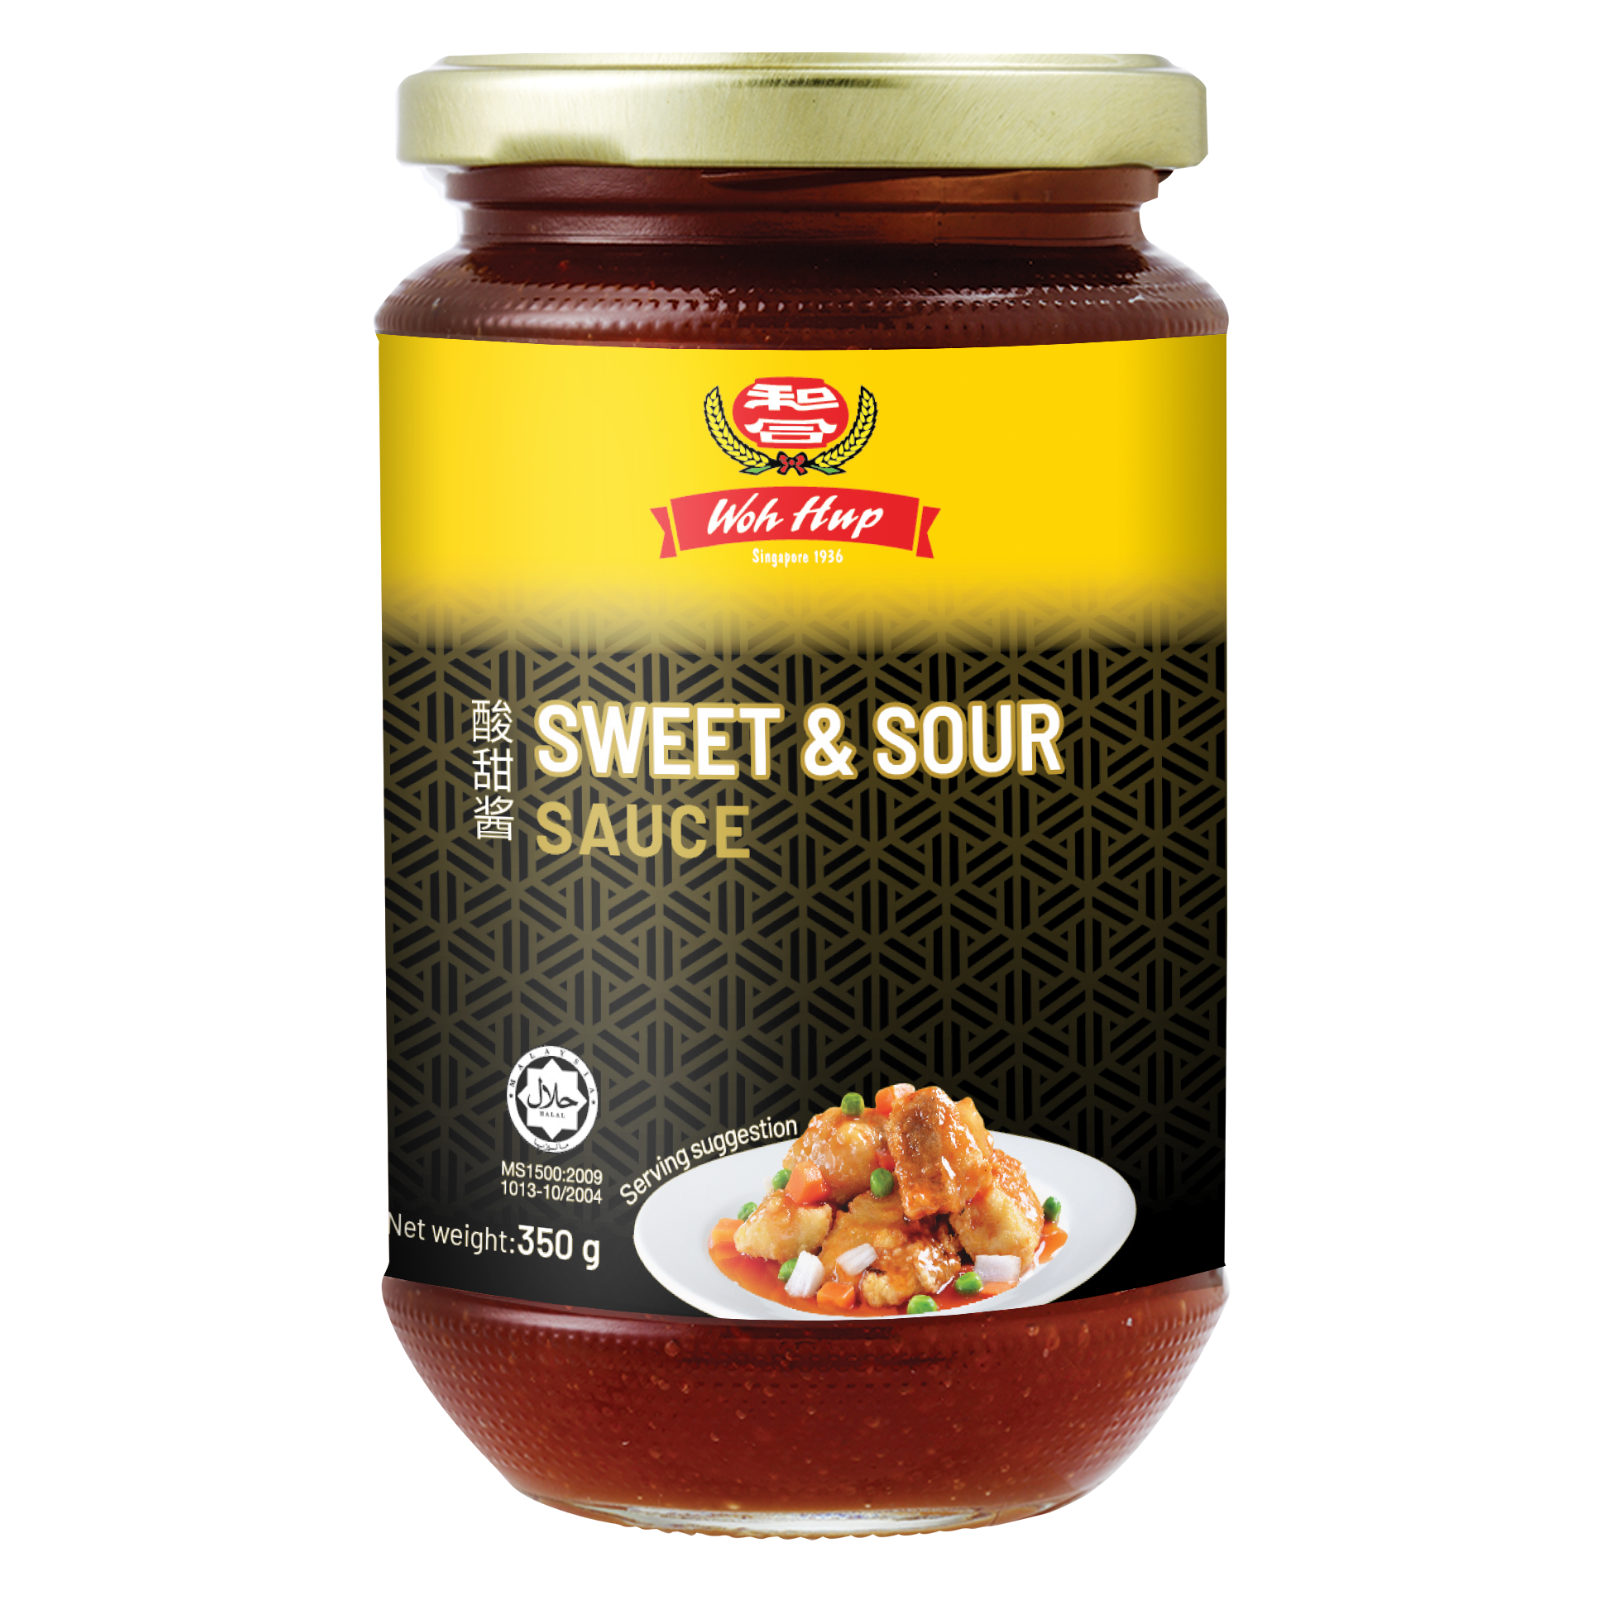 Woh Hup Sweet & Sour Sauce 350g